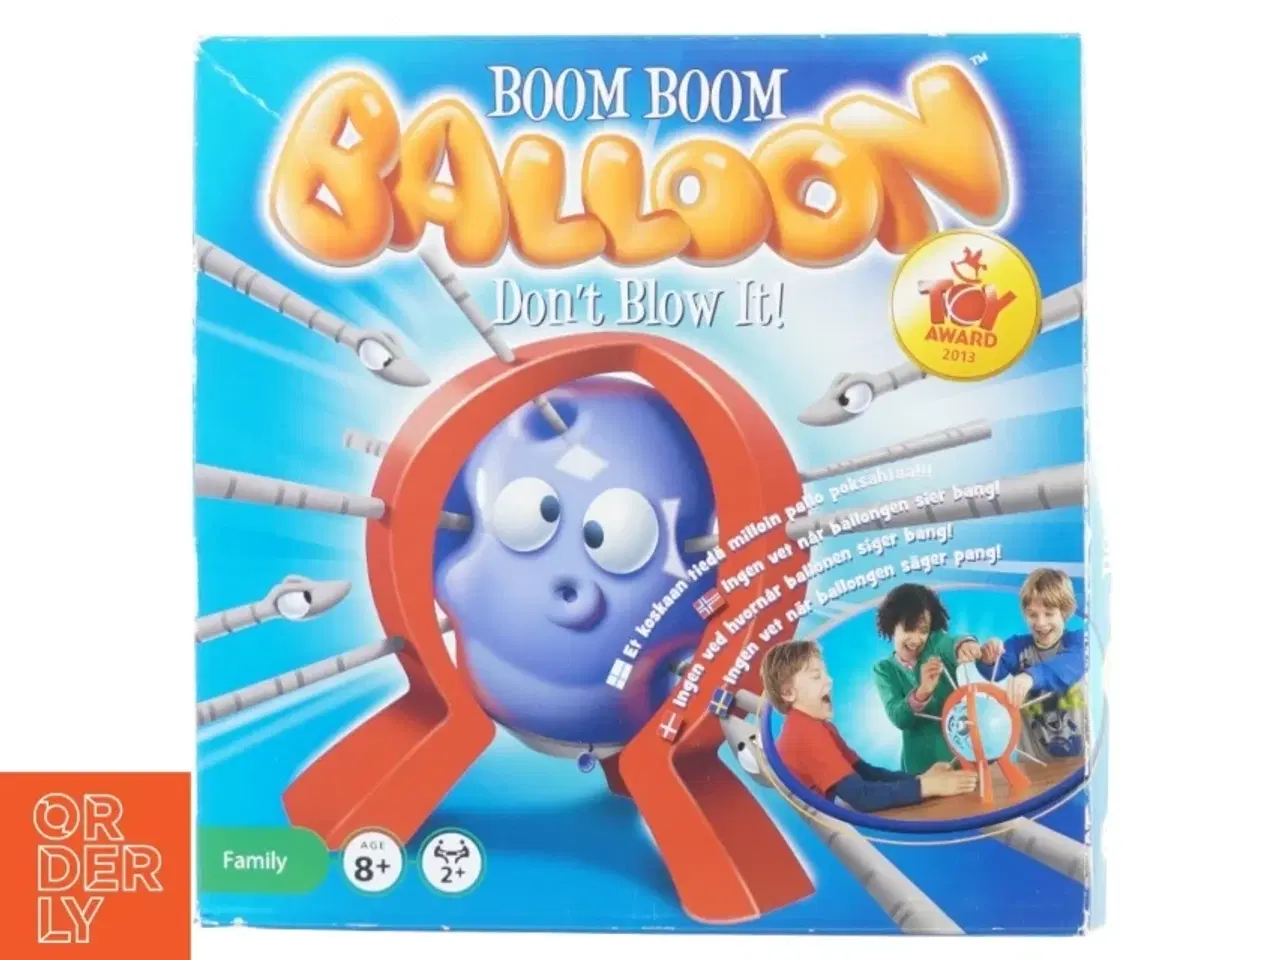 Billede 1 - Boom boom balloon, don´t blow it fra Spin Master (str. 27 x 27 cm)